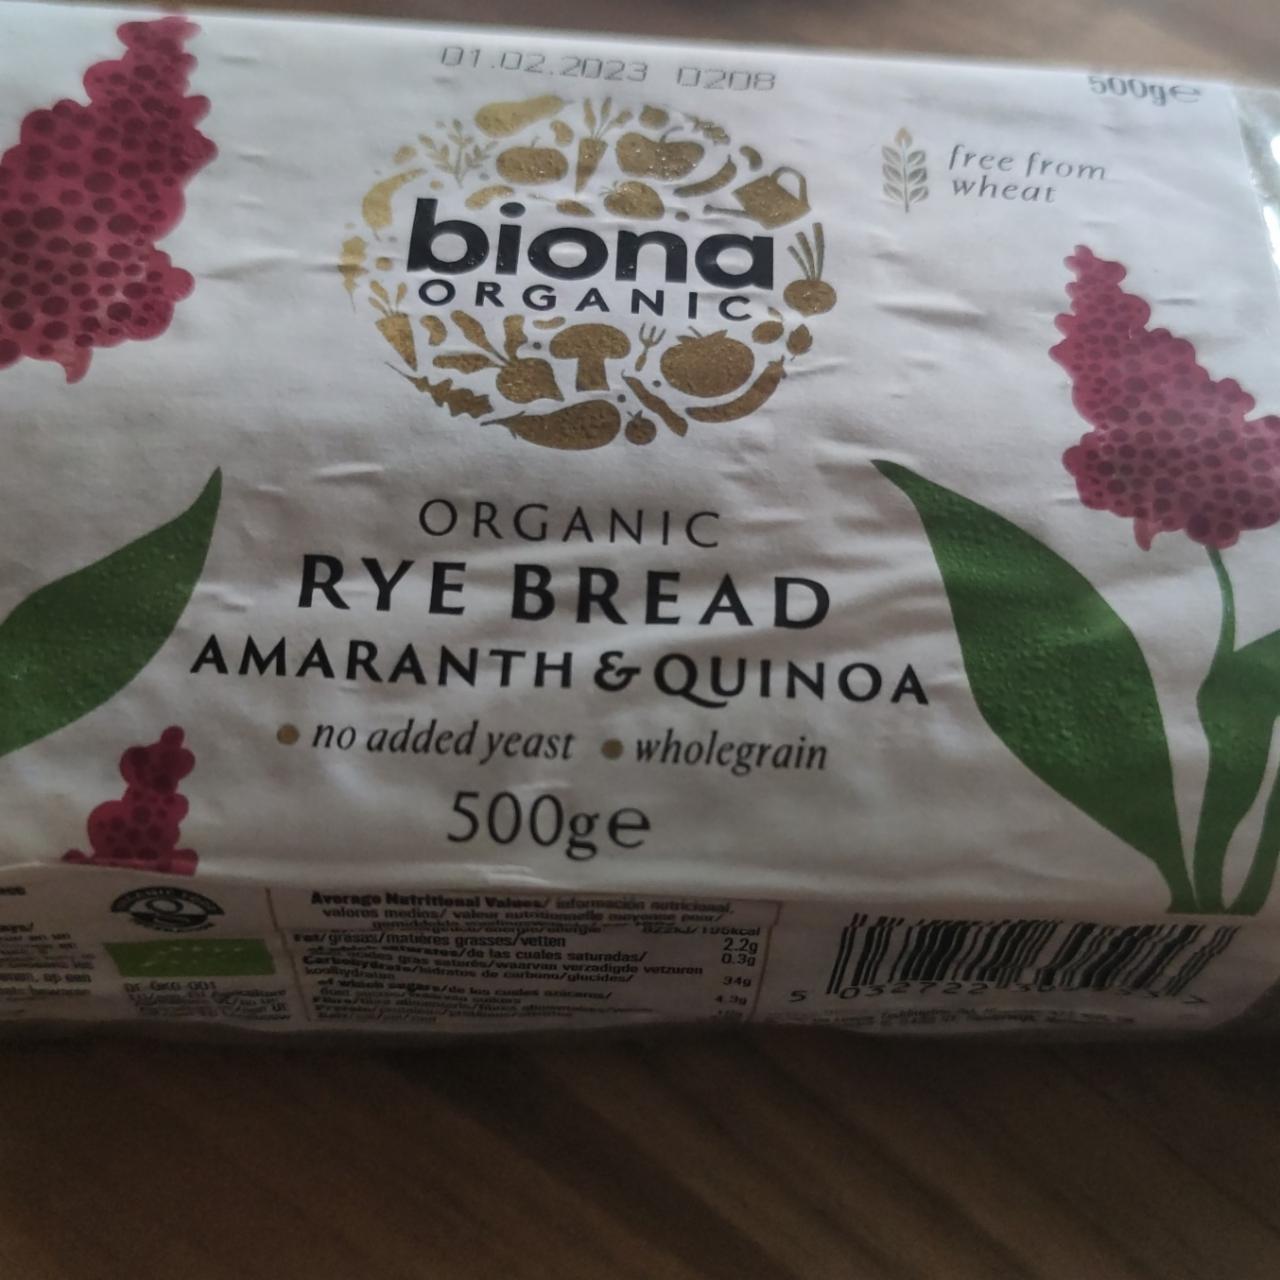 Fotografie - Rye Bread Amaranth & Quinoa biona organic